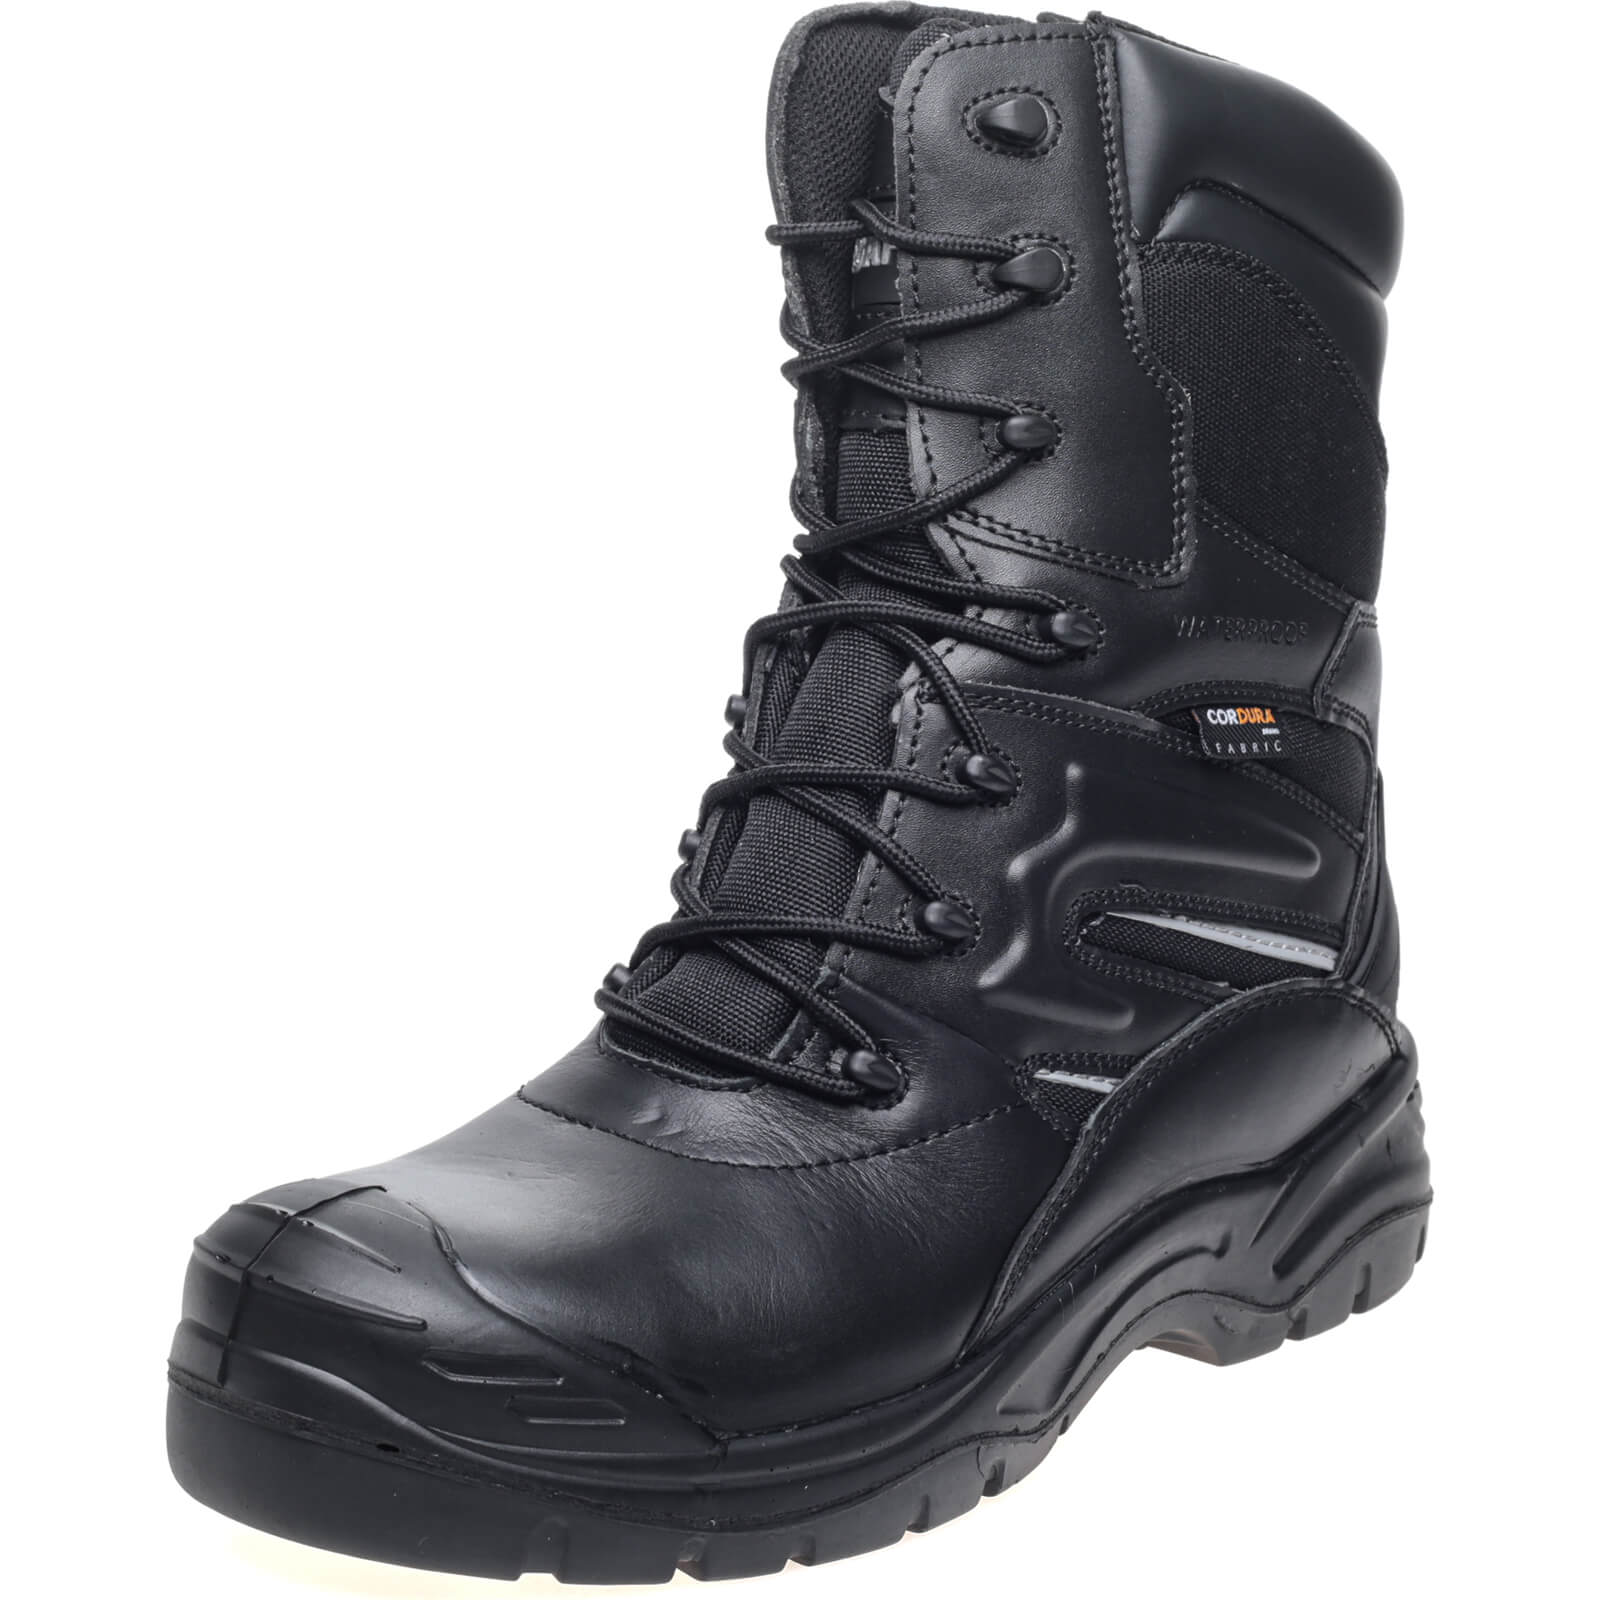 Image of Apache COMBAT Non Metallic High Leg Safety Boots Black Size 6